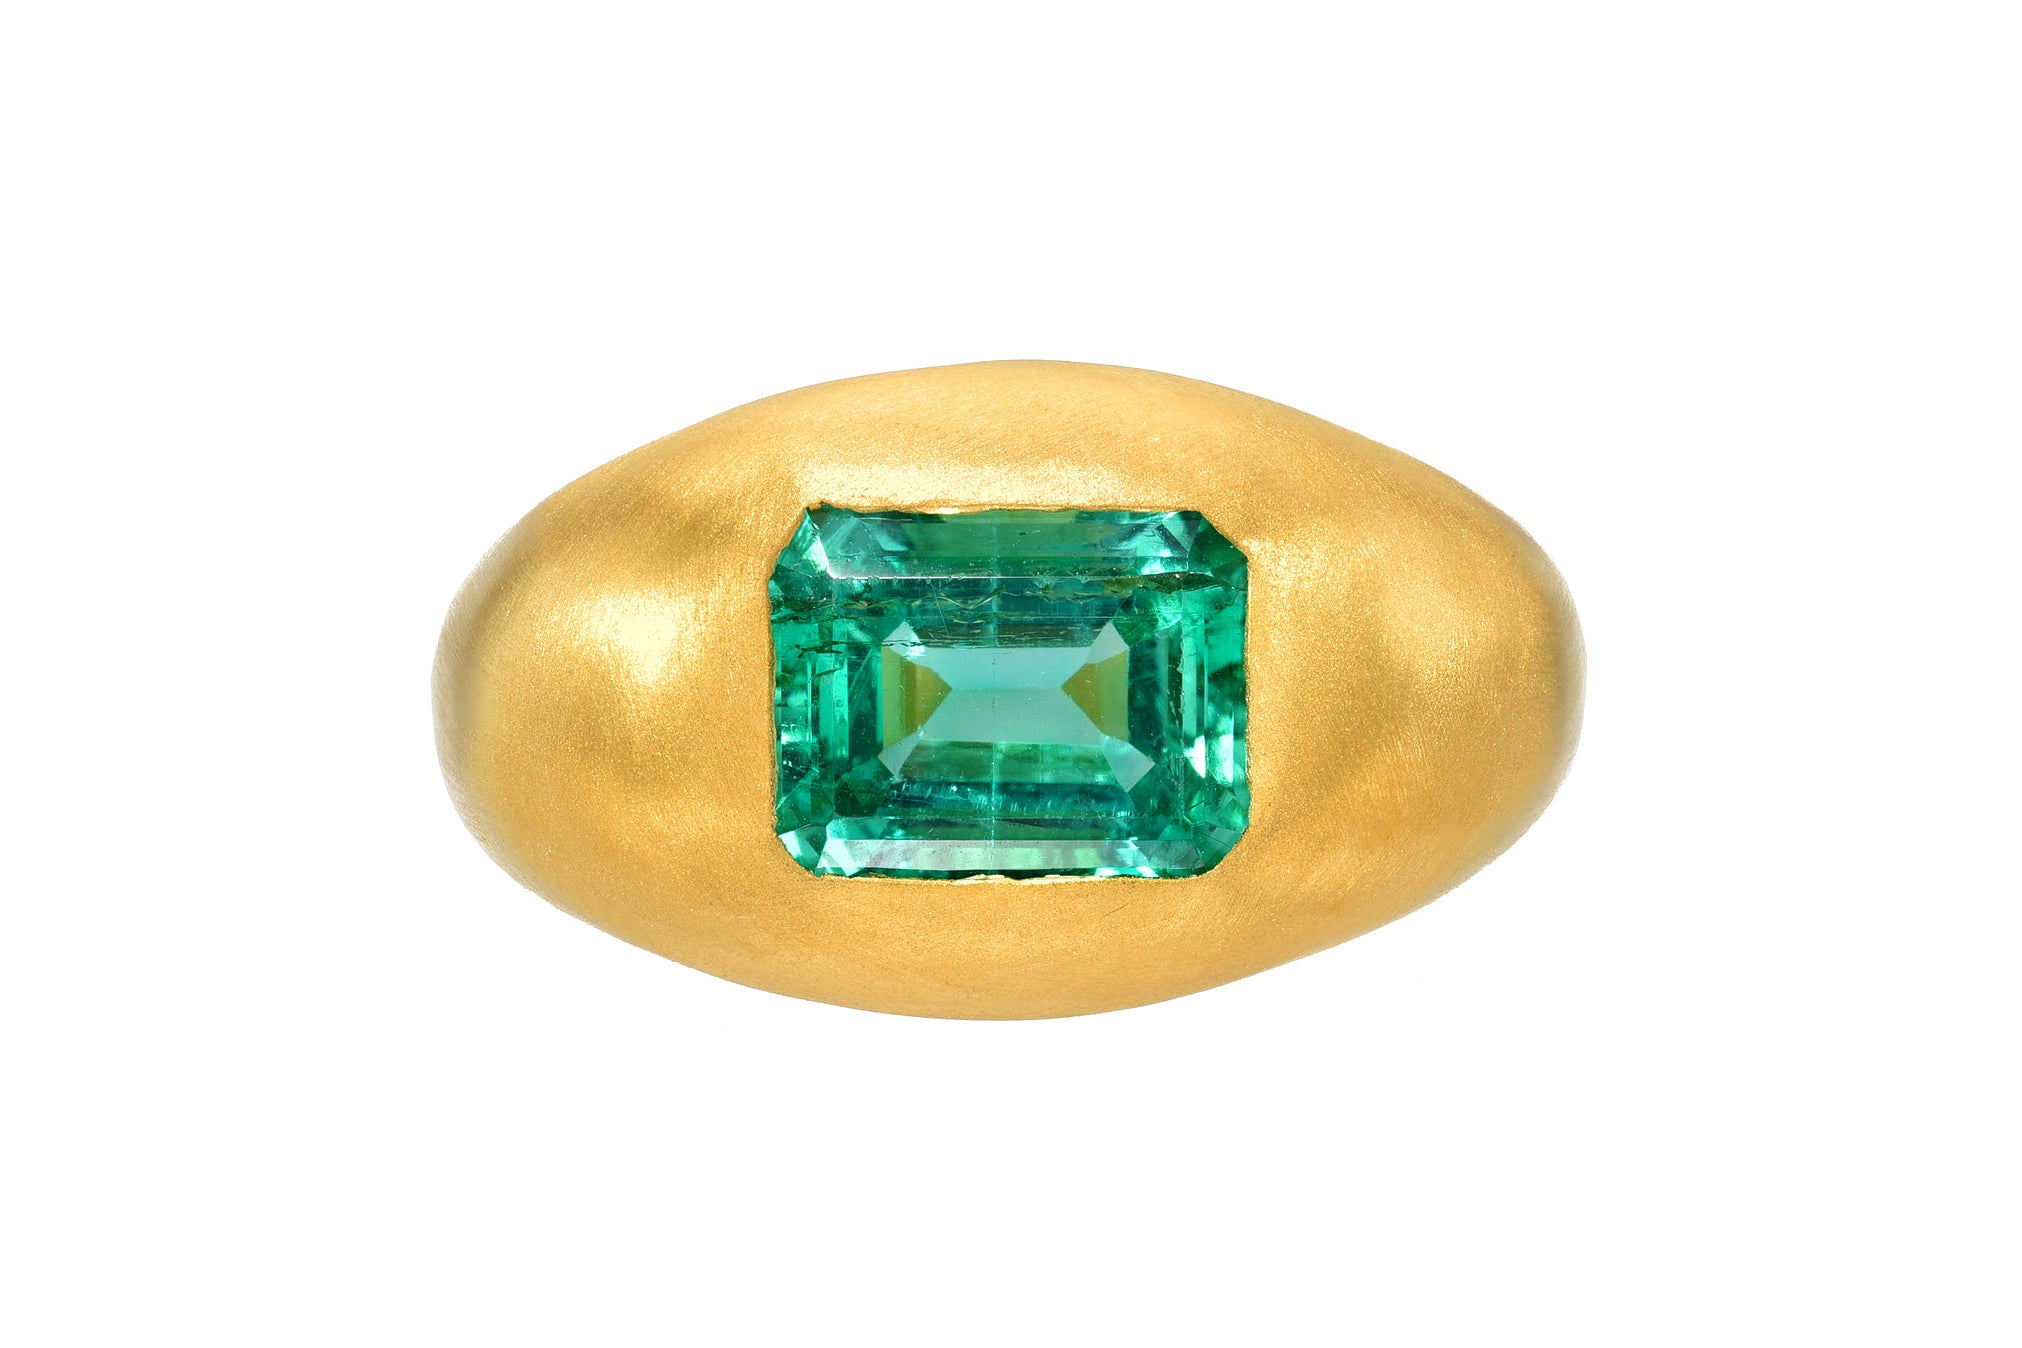 Darius Jewels darya khonsary Arielle Chiara one of a kind mint emerald gem signet ring